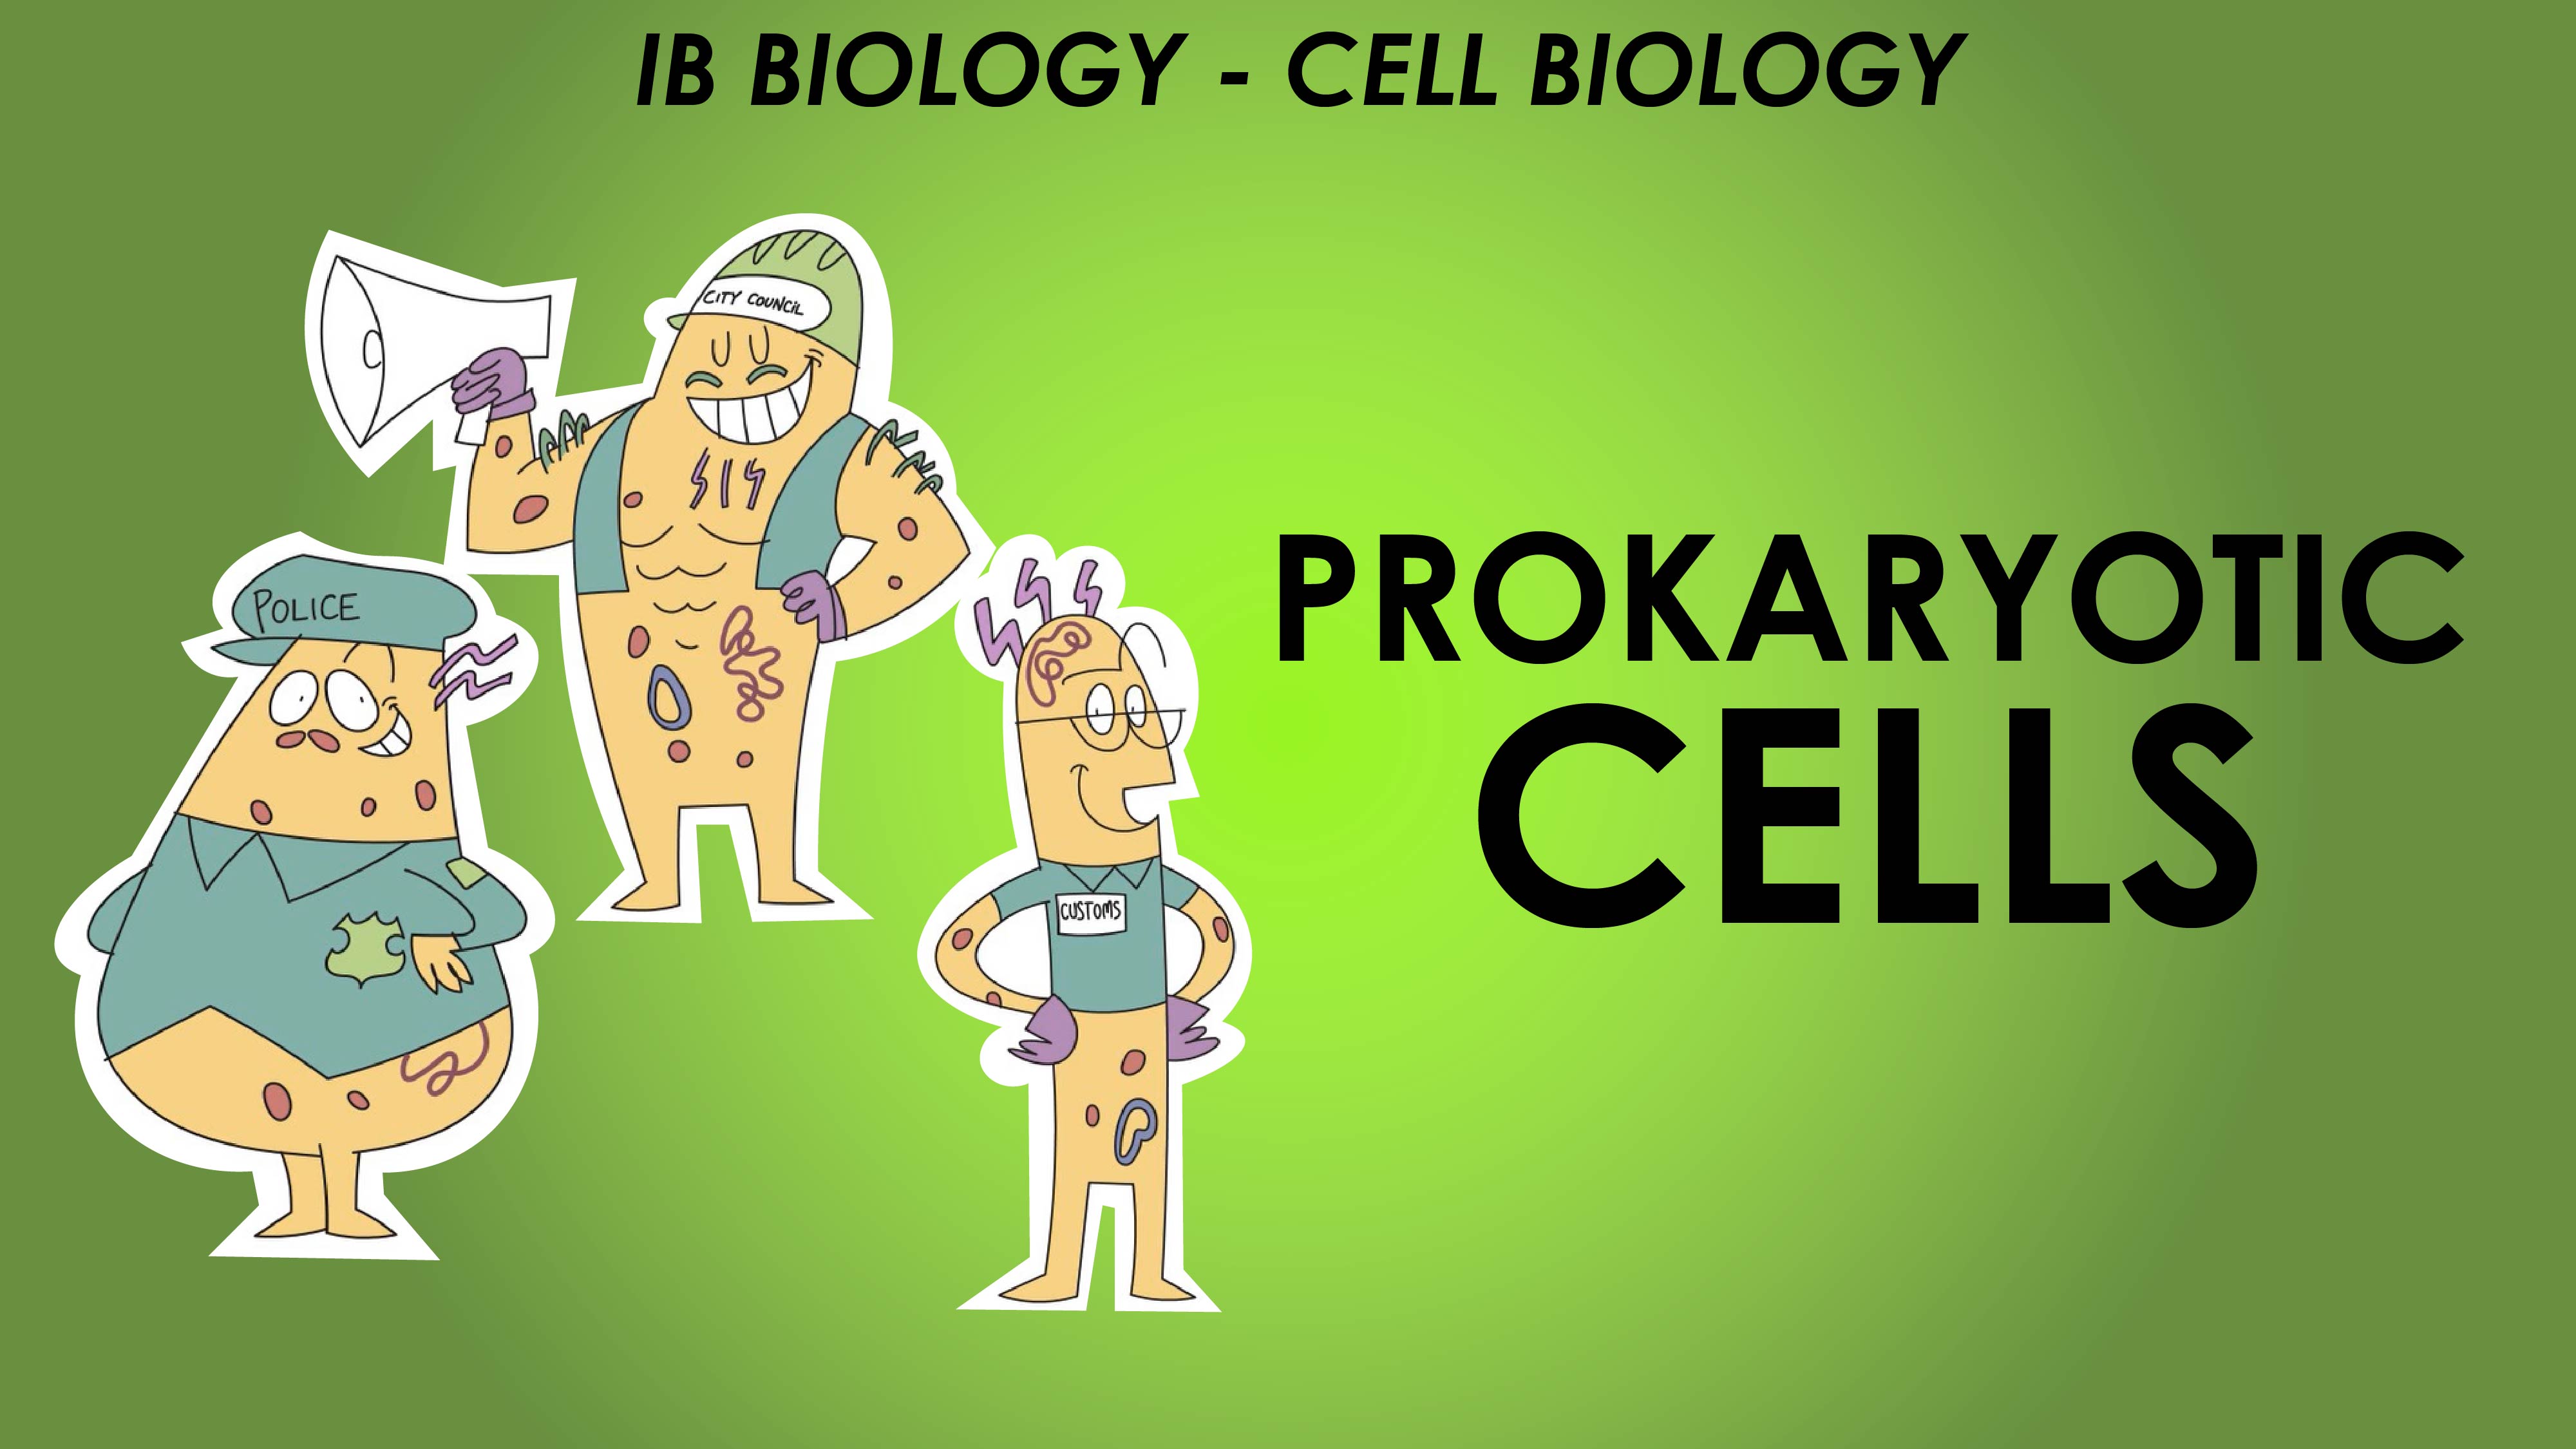 IB Cell Biology - Prokaryotic Cells